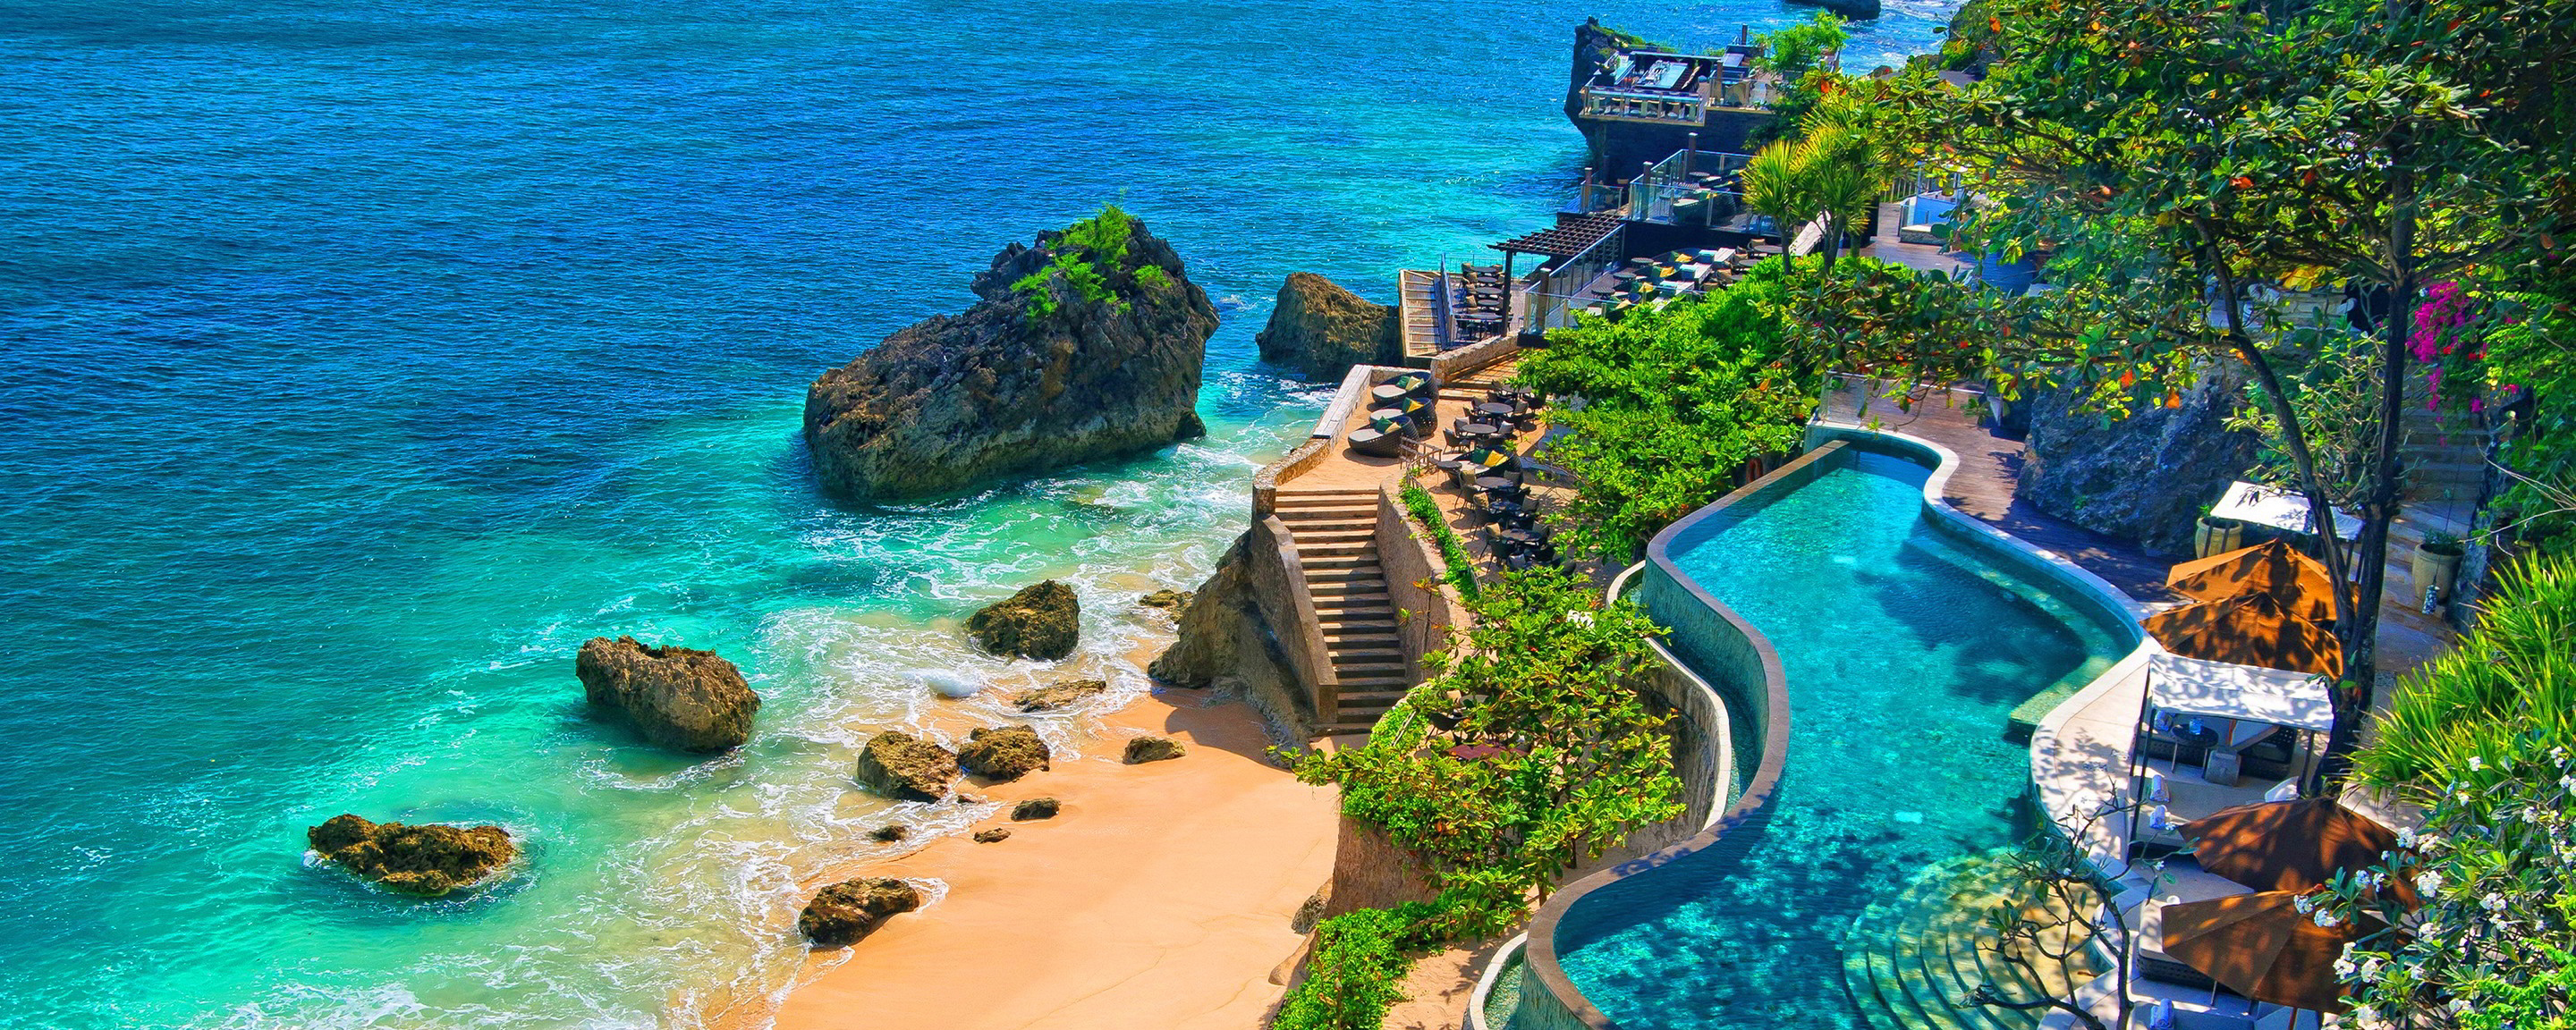 Bali Holidays & Package Deals | Virgin Australia